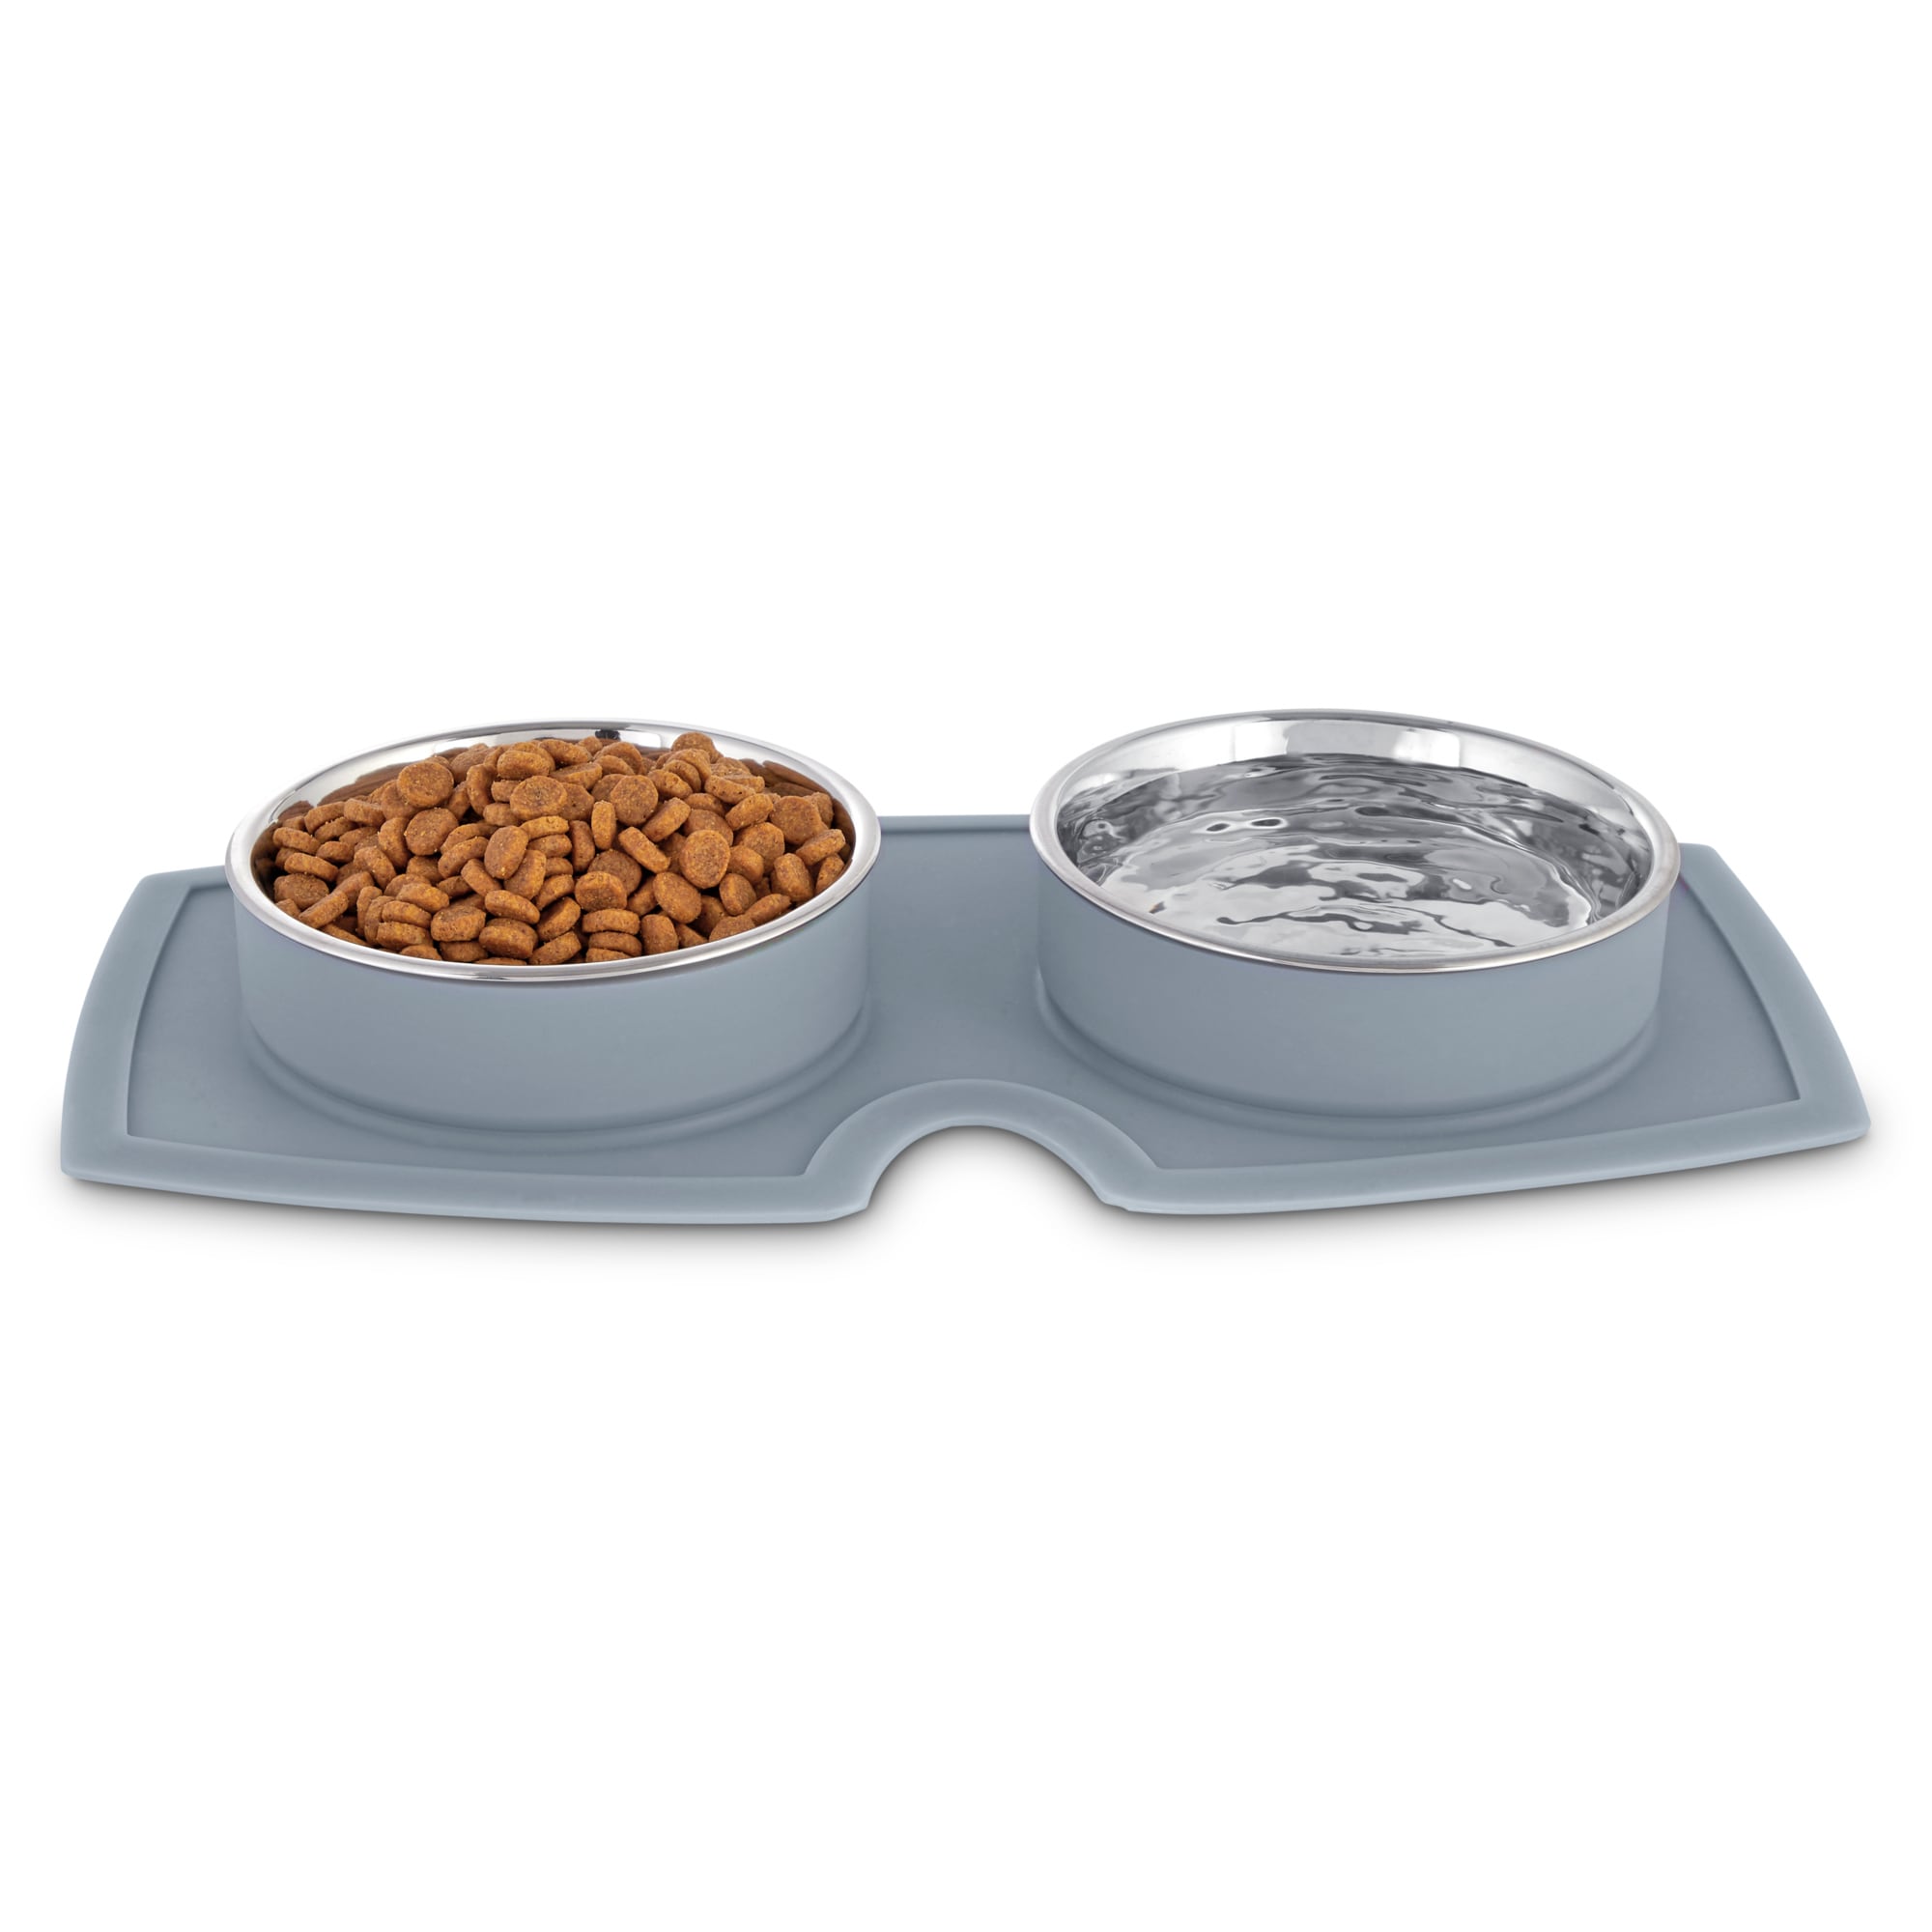 JW PET Skid Stop Basic Non-Skid Plastic Dog & Cat Bowl, Color Varies, 4-cup  